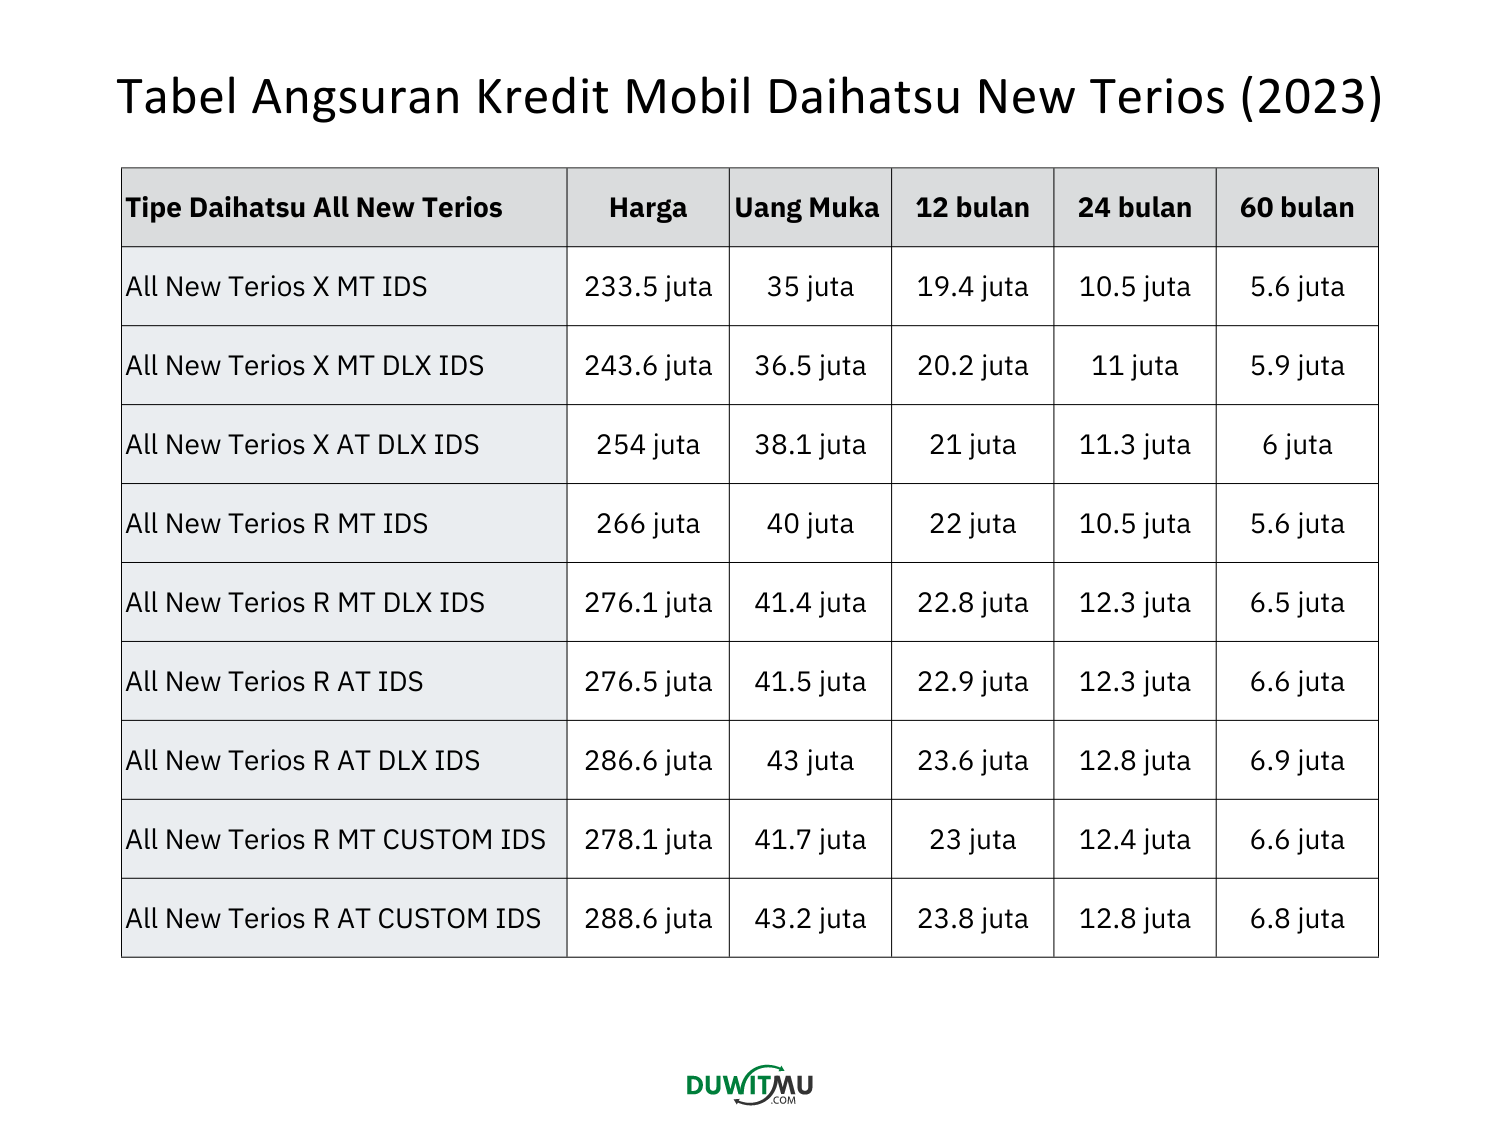 Tabel Angsuran Daihatsu All New Terios 2023